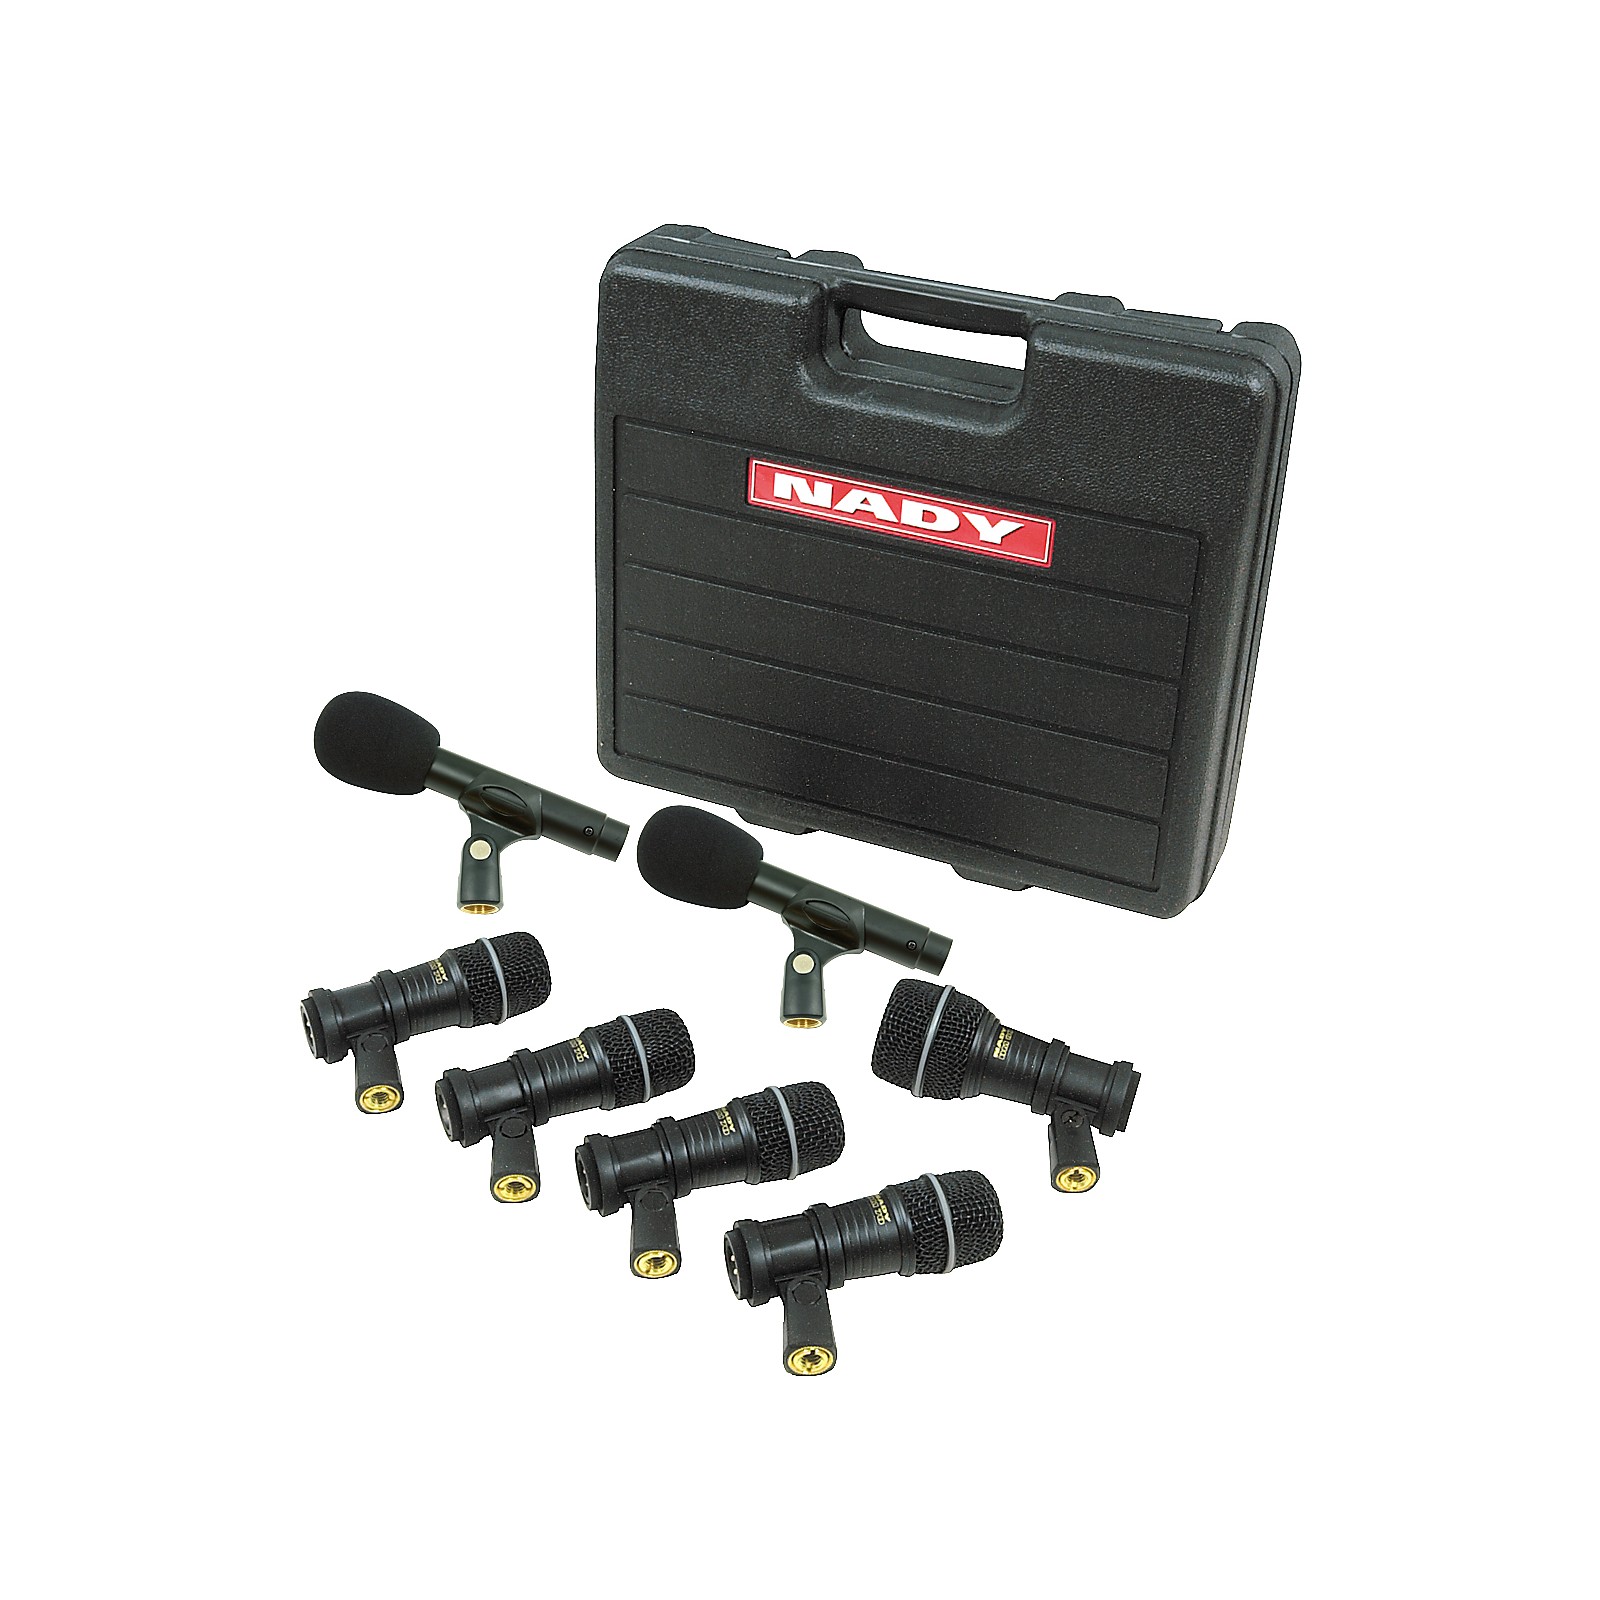 Drumkit set microphone BETADMK7 Drum Kit Microphone instrument kit